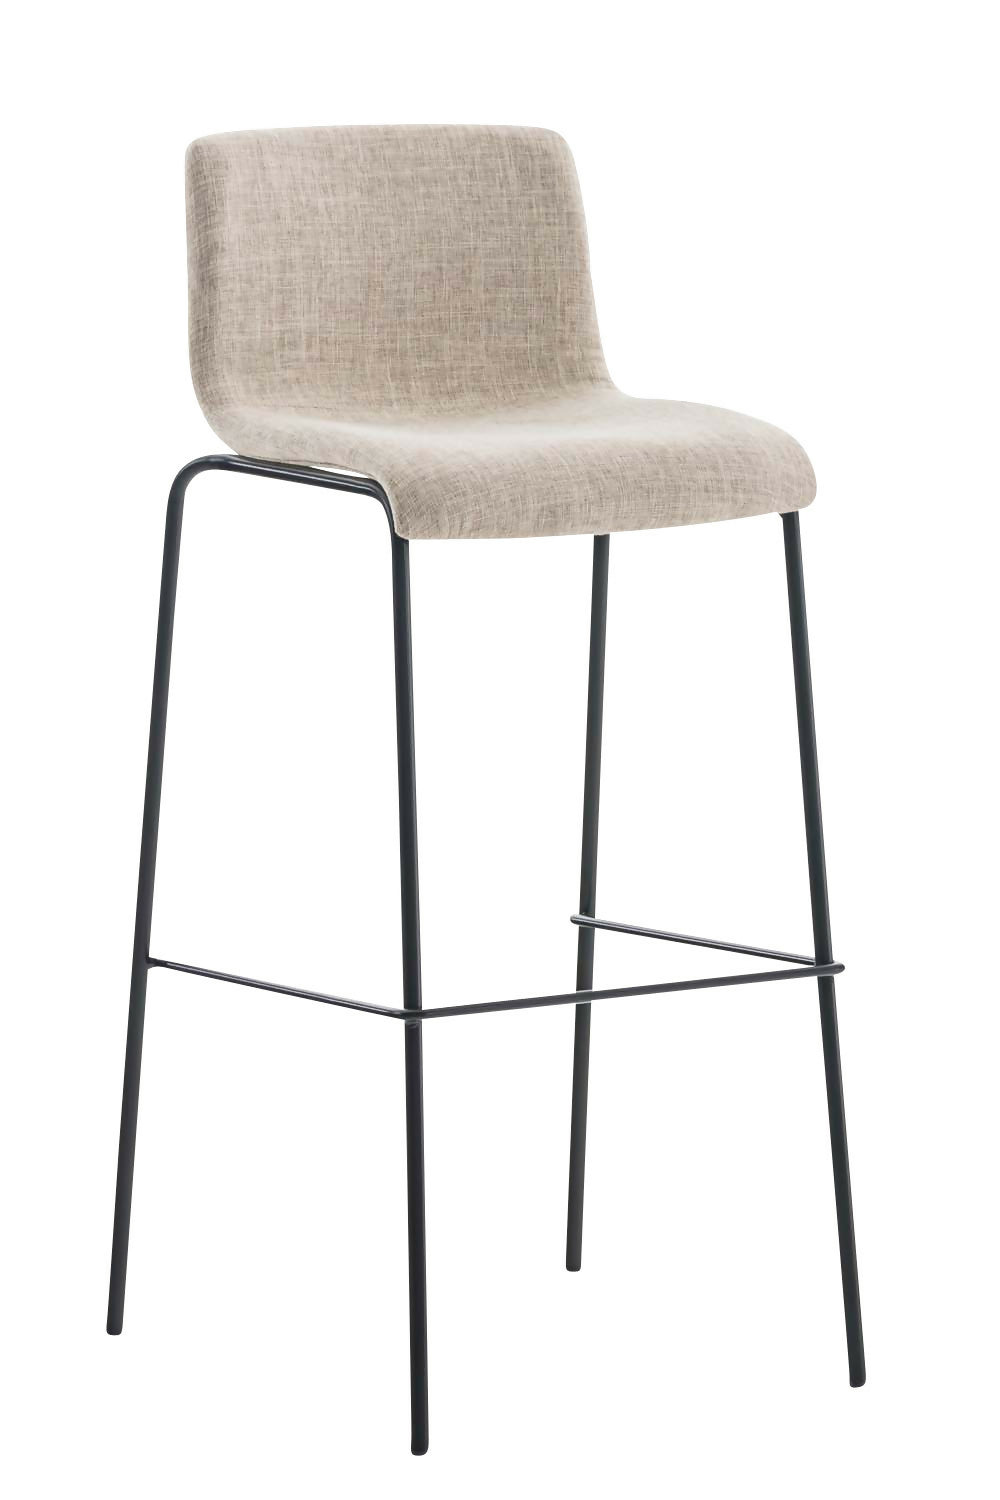 Hoover Bar Chair - Metal / Cream Fabric